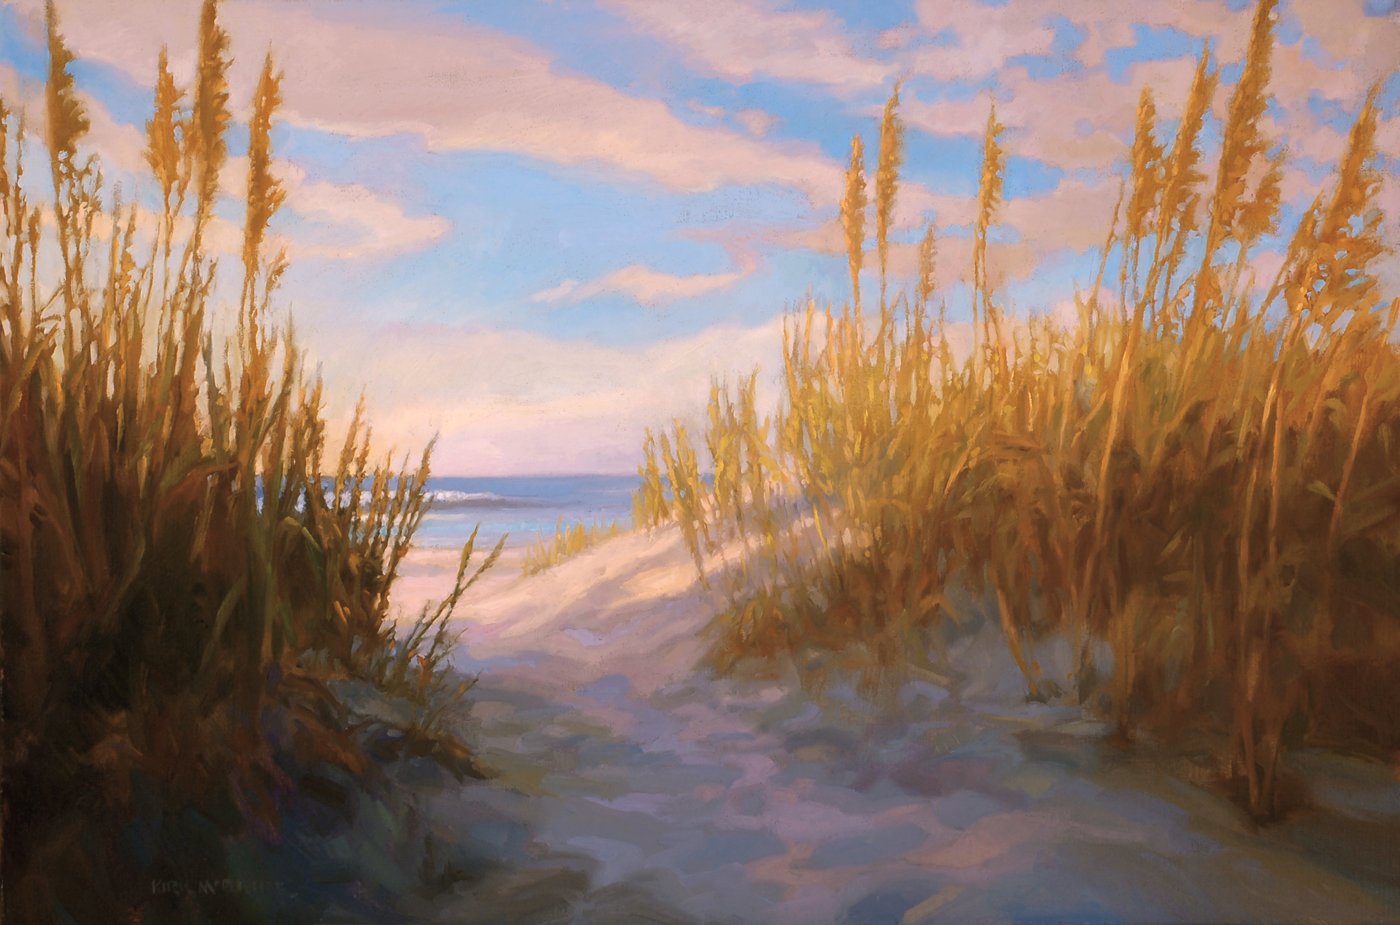 Sea Grass Morning by Kirk McBride